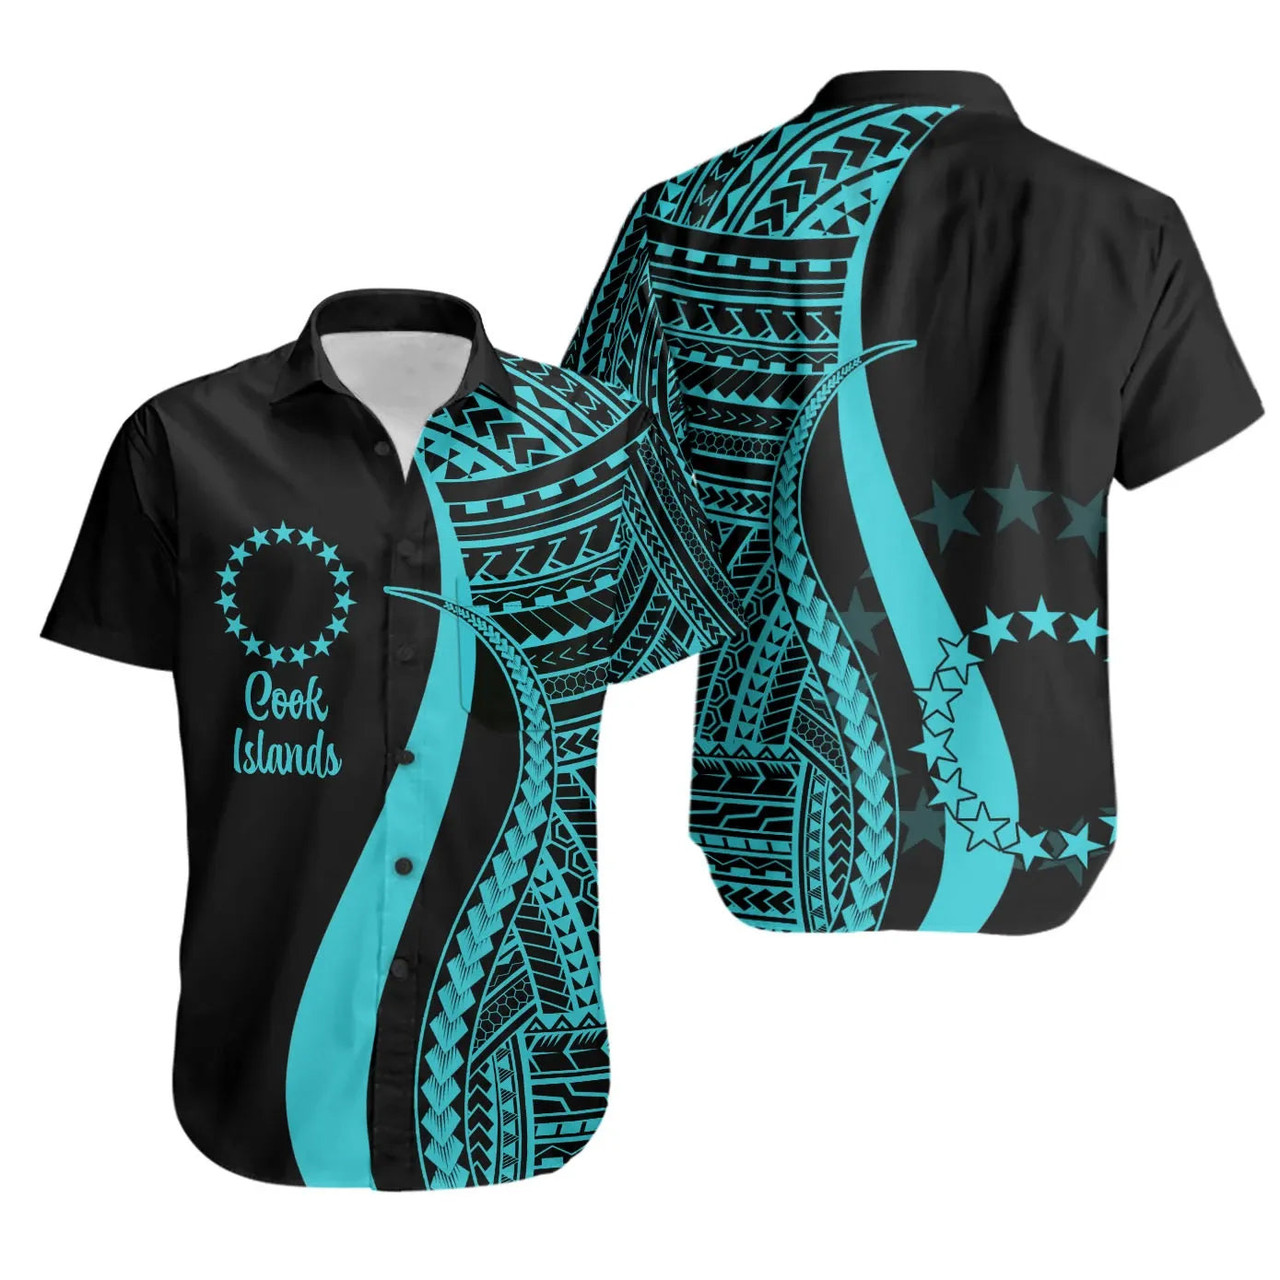 Cook Islands Hawaiian Shirts - Turquoise Polynesian Tentacle Tribal Pattern 1